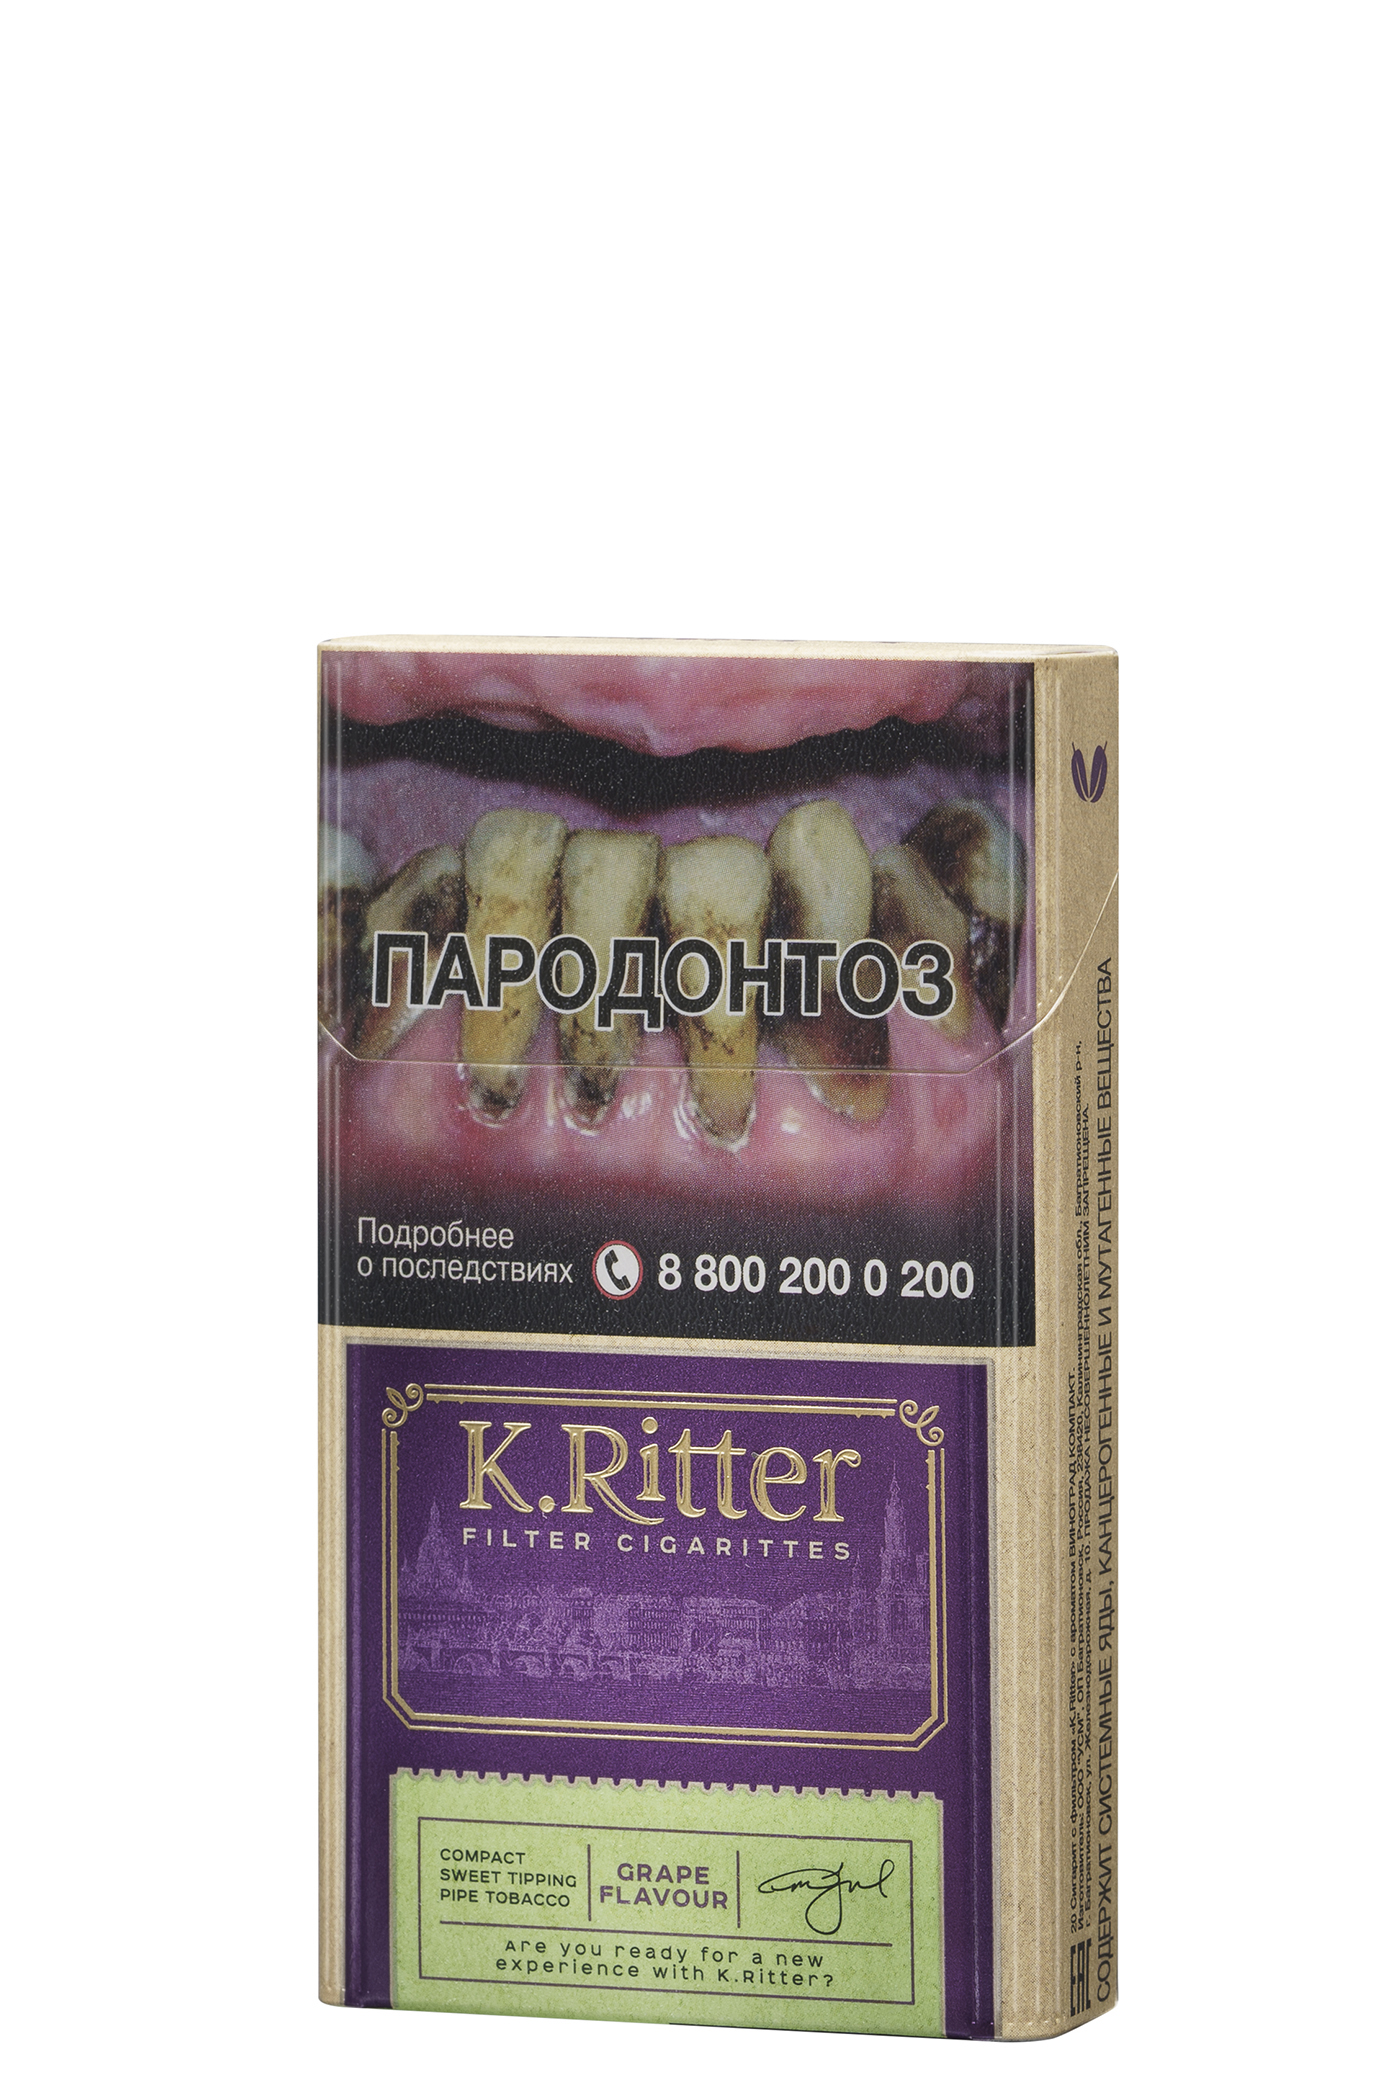 Ritter сигареты купить. K Ritter сигареты. Сигареты k.Ritter виноград. Сигареты Риттер виноград. Сигареты k.Ritter виноград компакт 20.